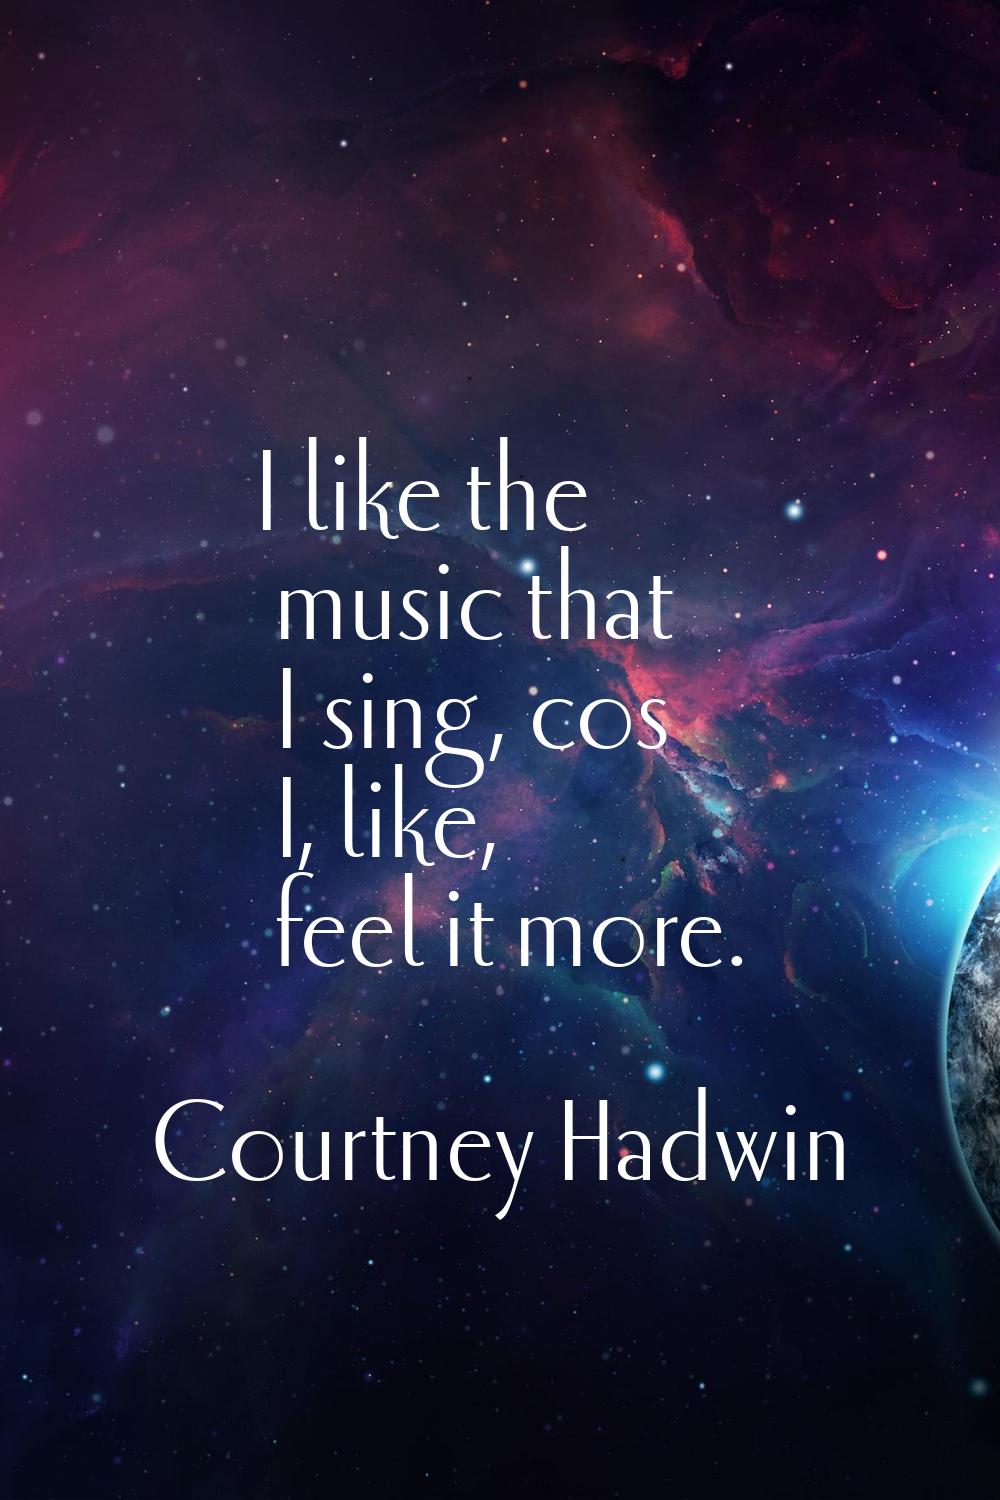 I like the music that I sing, cos I, like, feel it more.